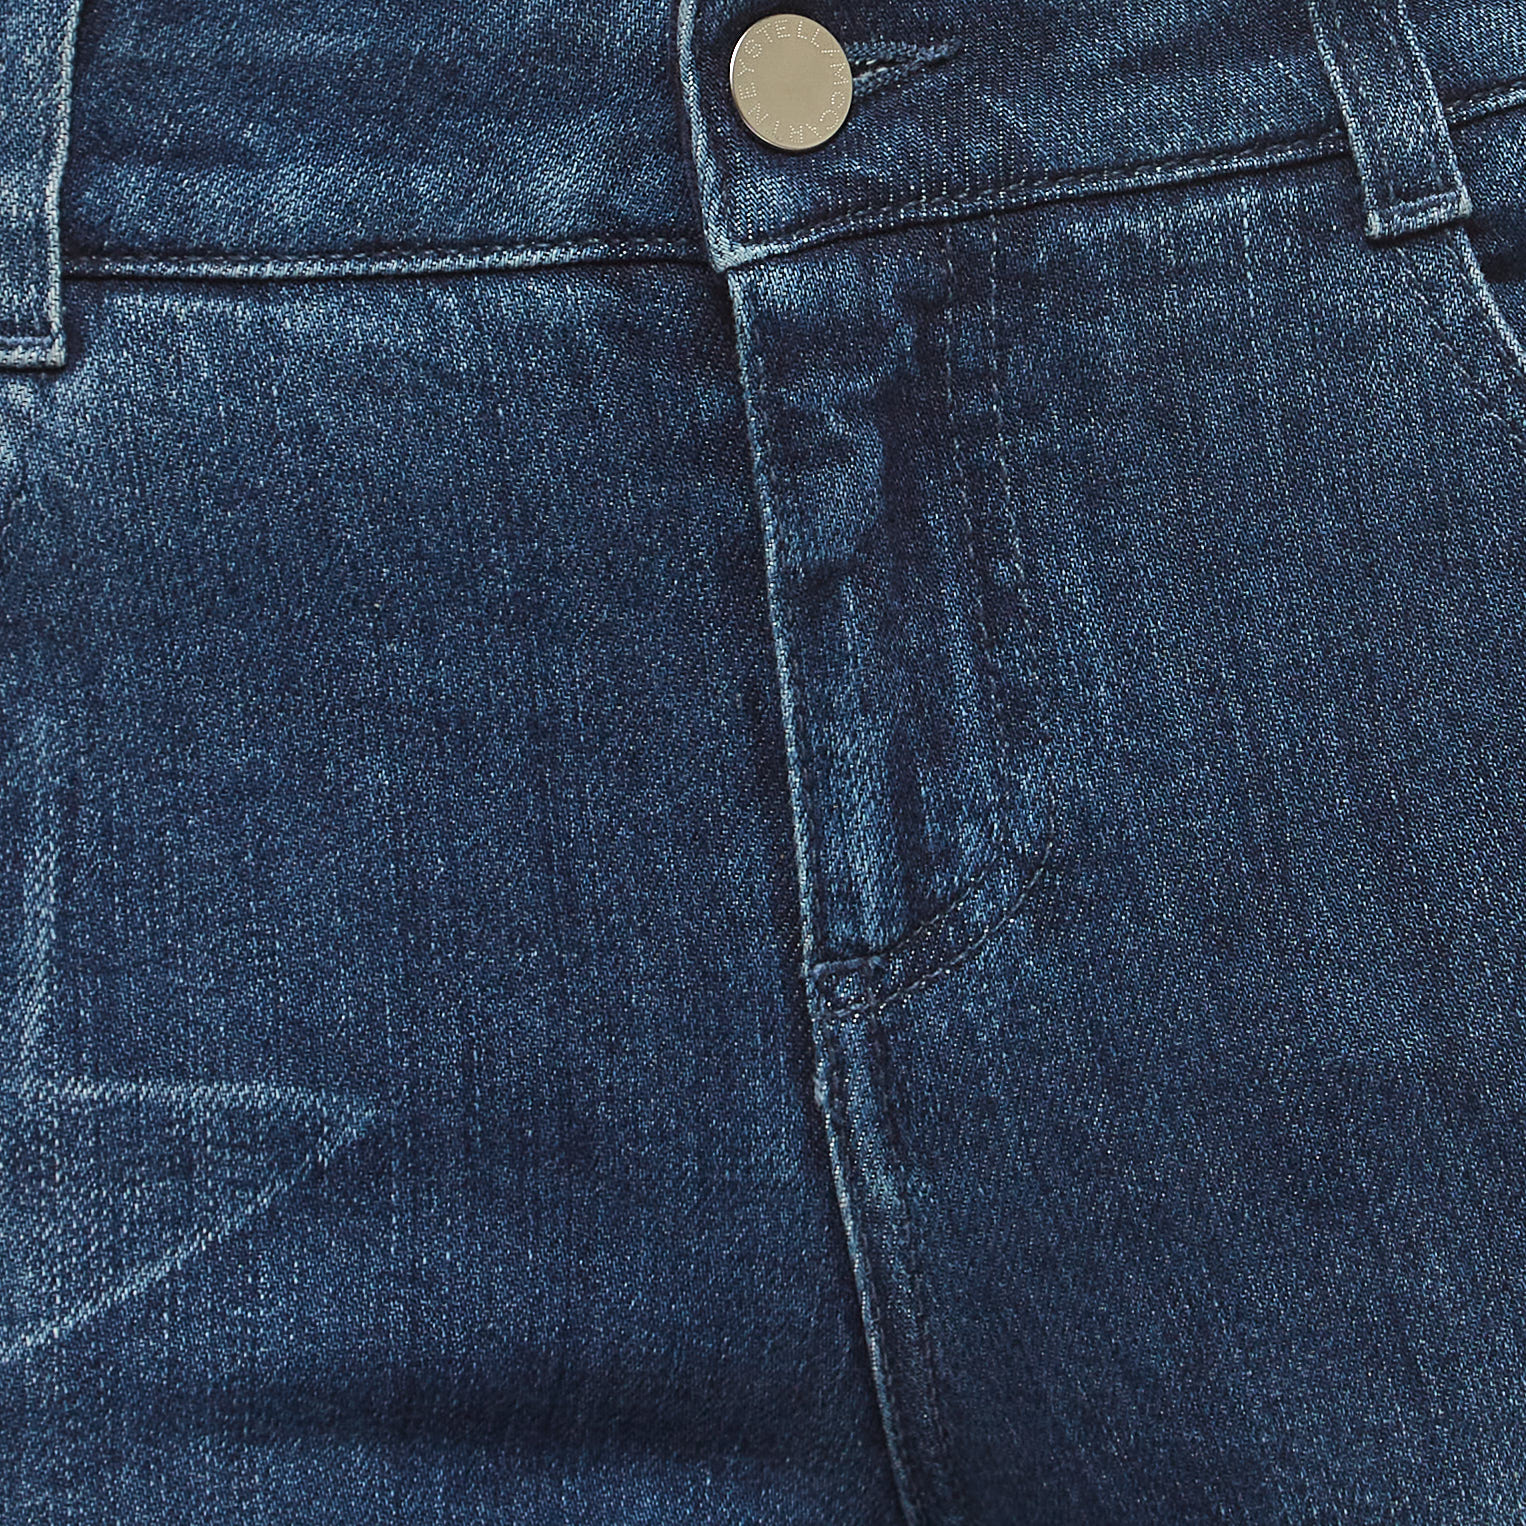 Stella McCartney Blue Star Patterned Denim Skinny Jeans M Waist 28